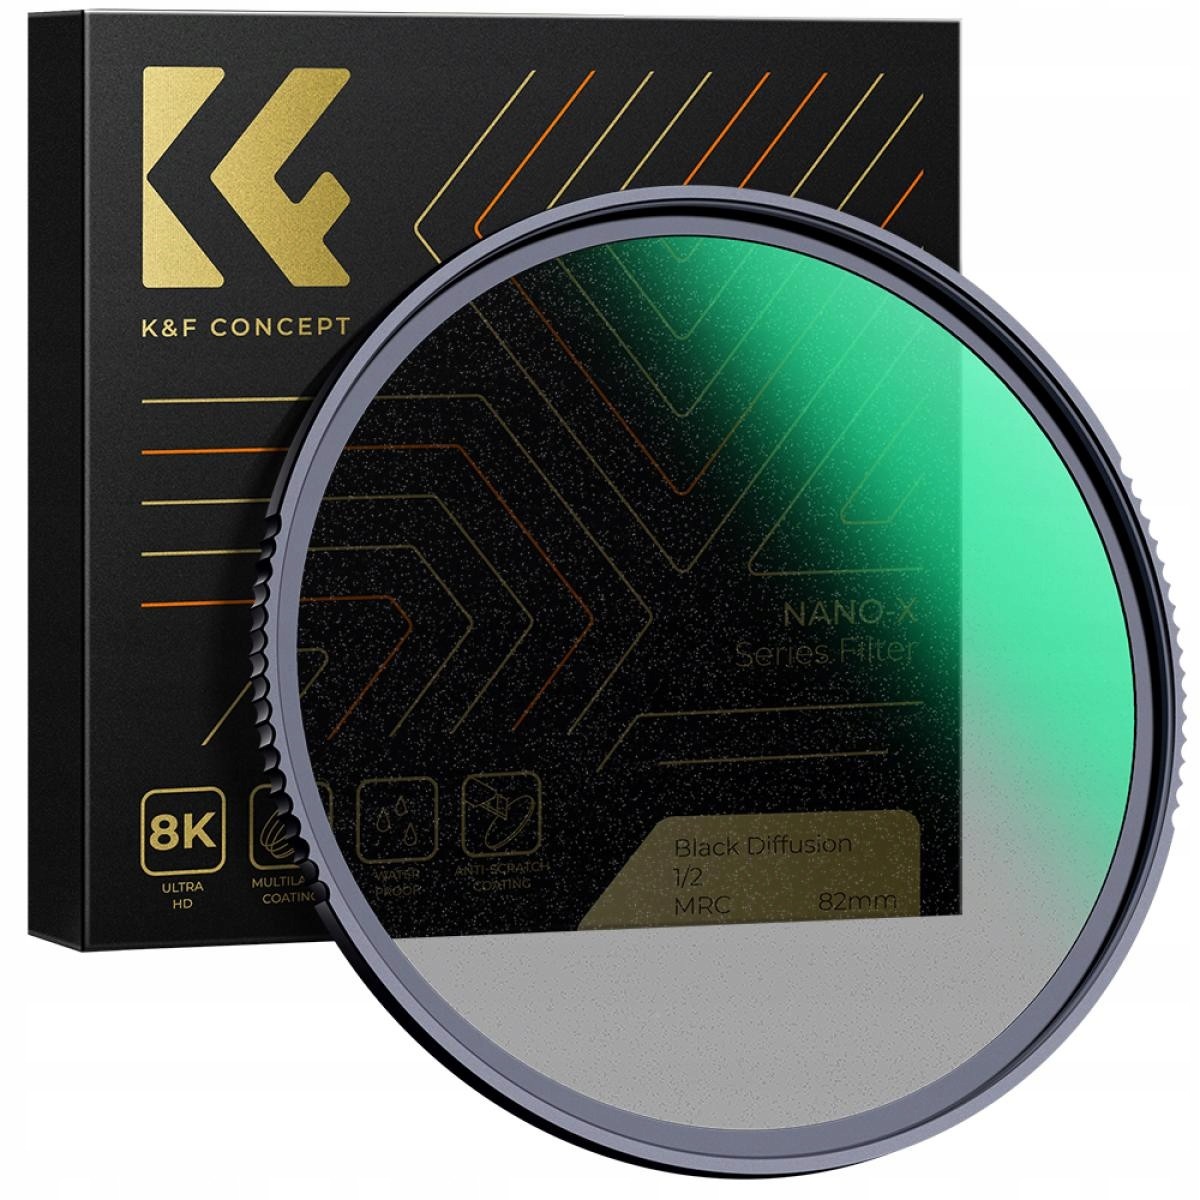 Filtr K&f Concept Efektový filtr Black Diffusion 1/2 Mrc 77mm